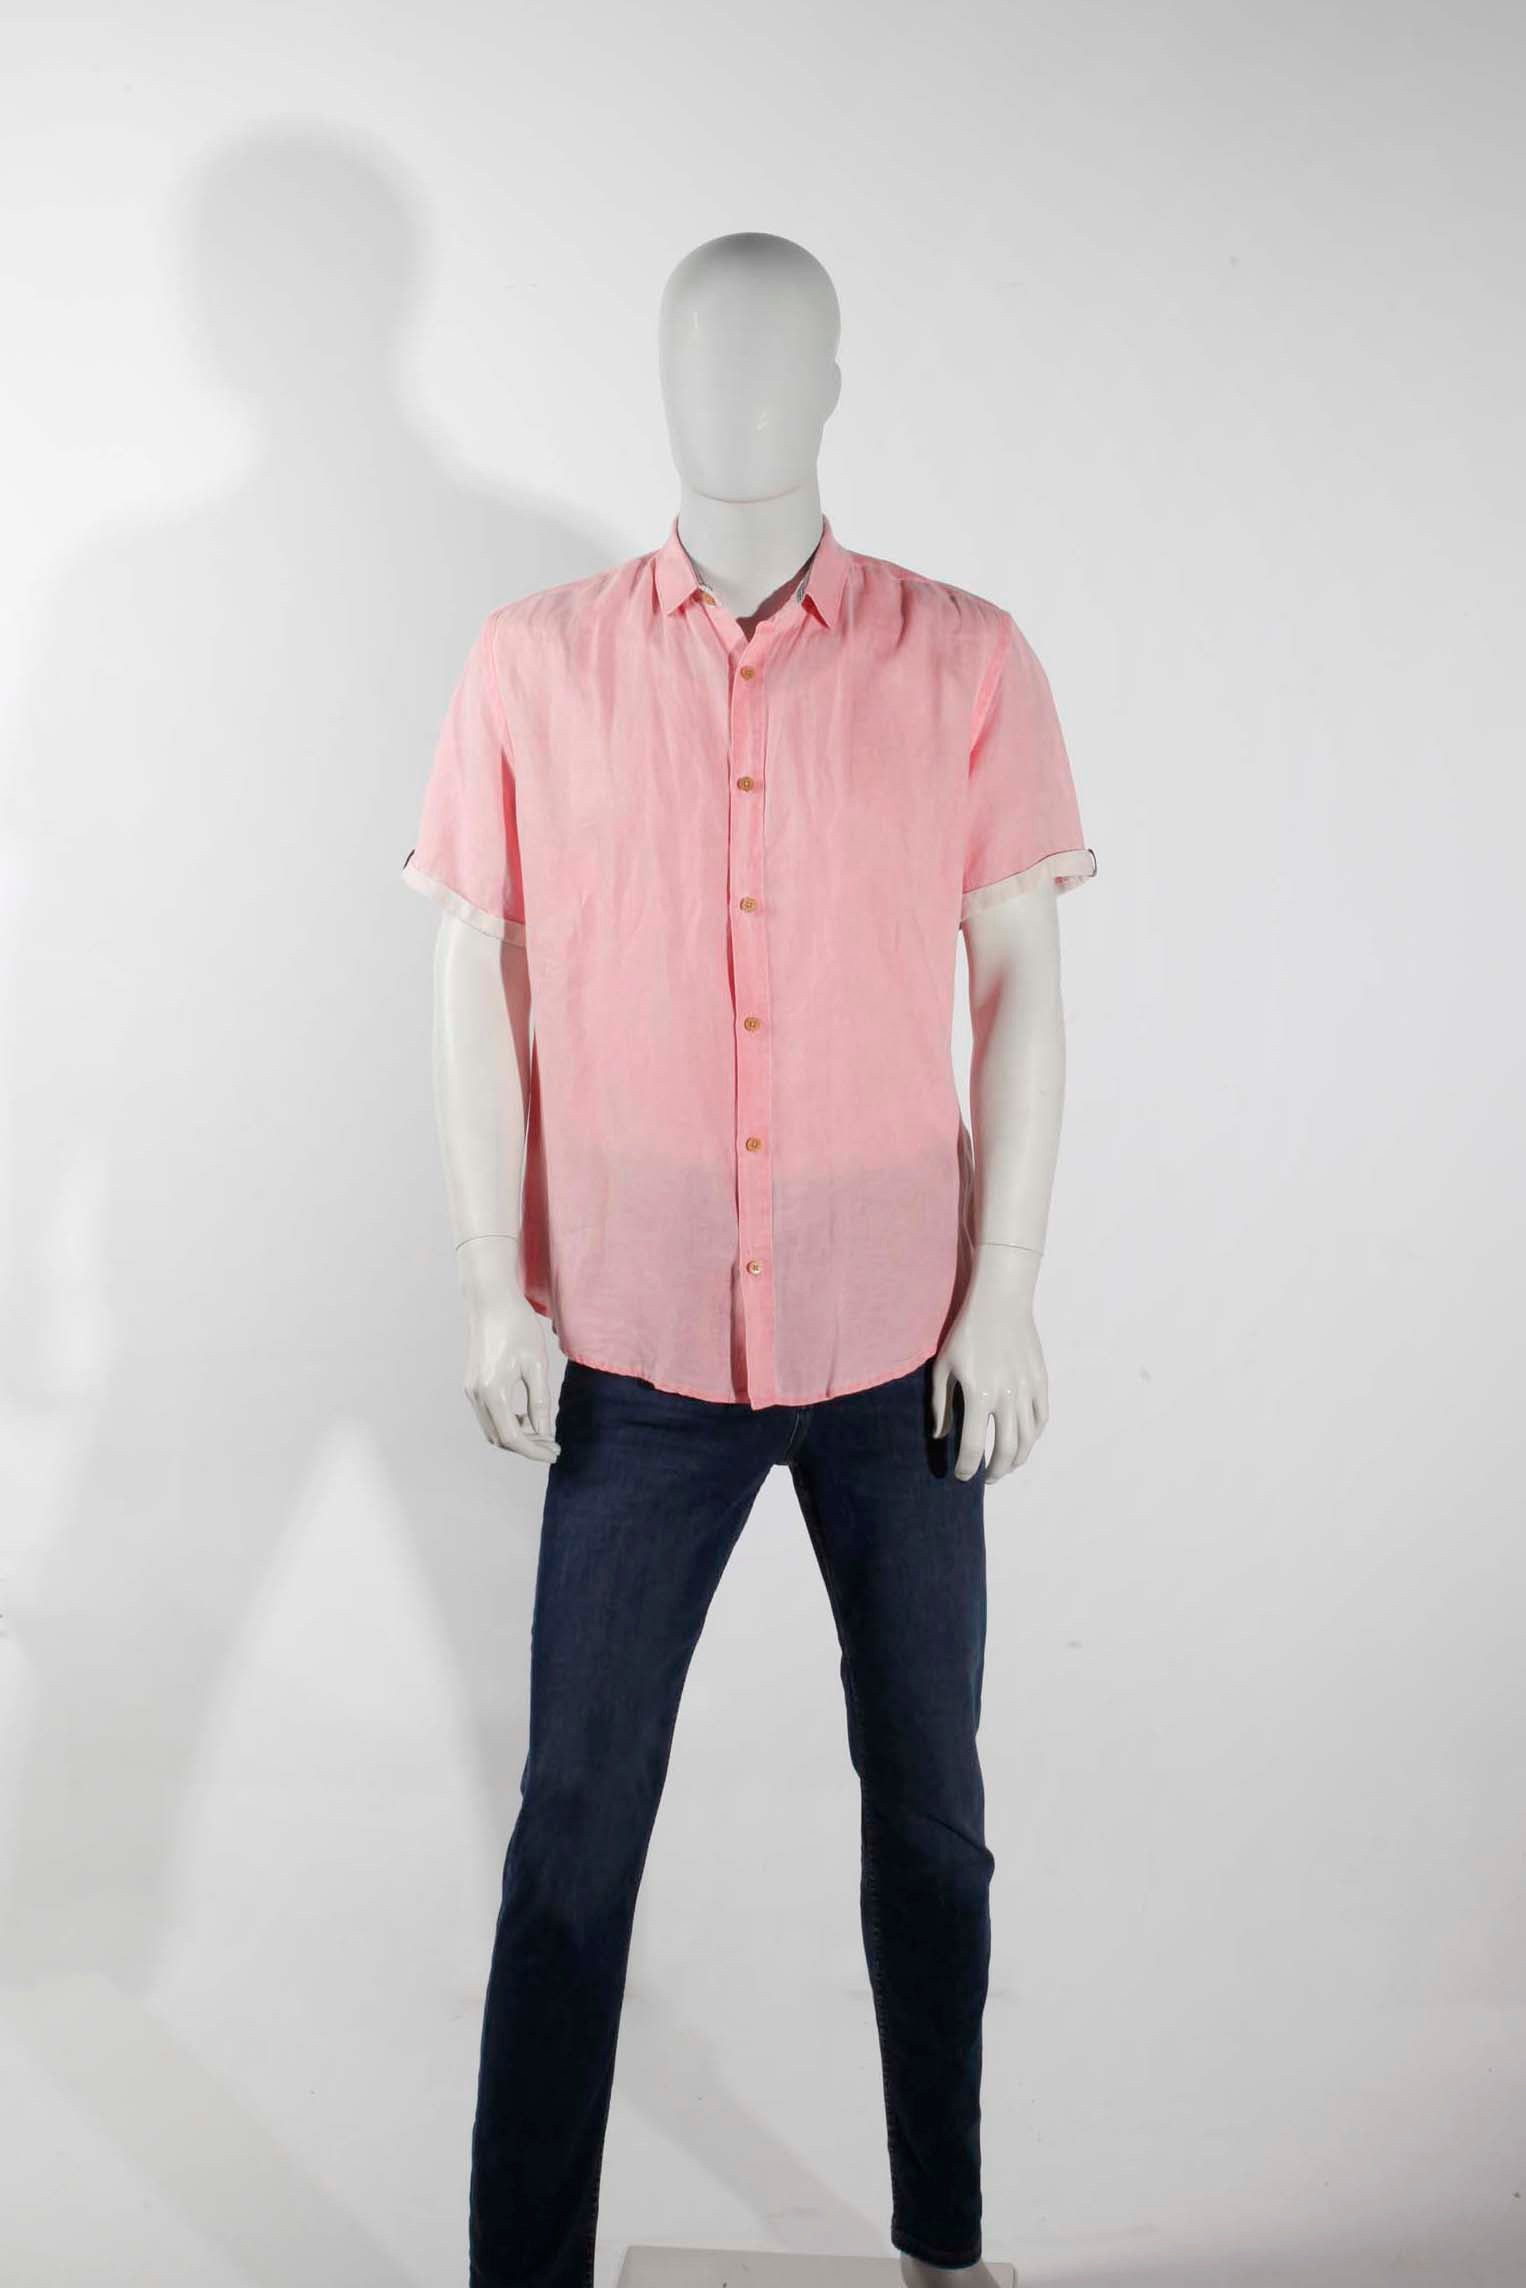 Men's Salmon Pink Linen Short-Sleeved Shirt (Large)